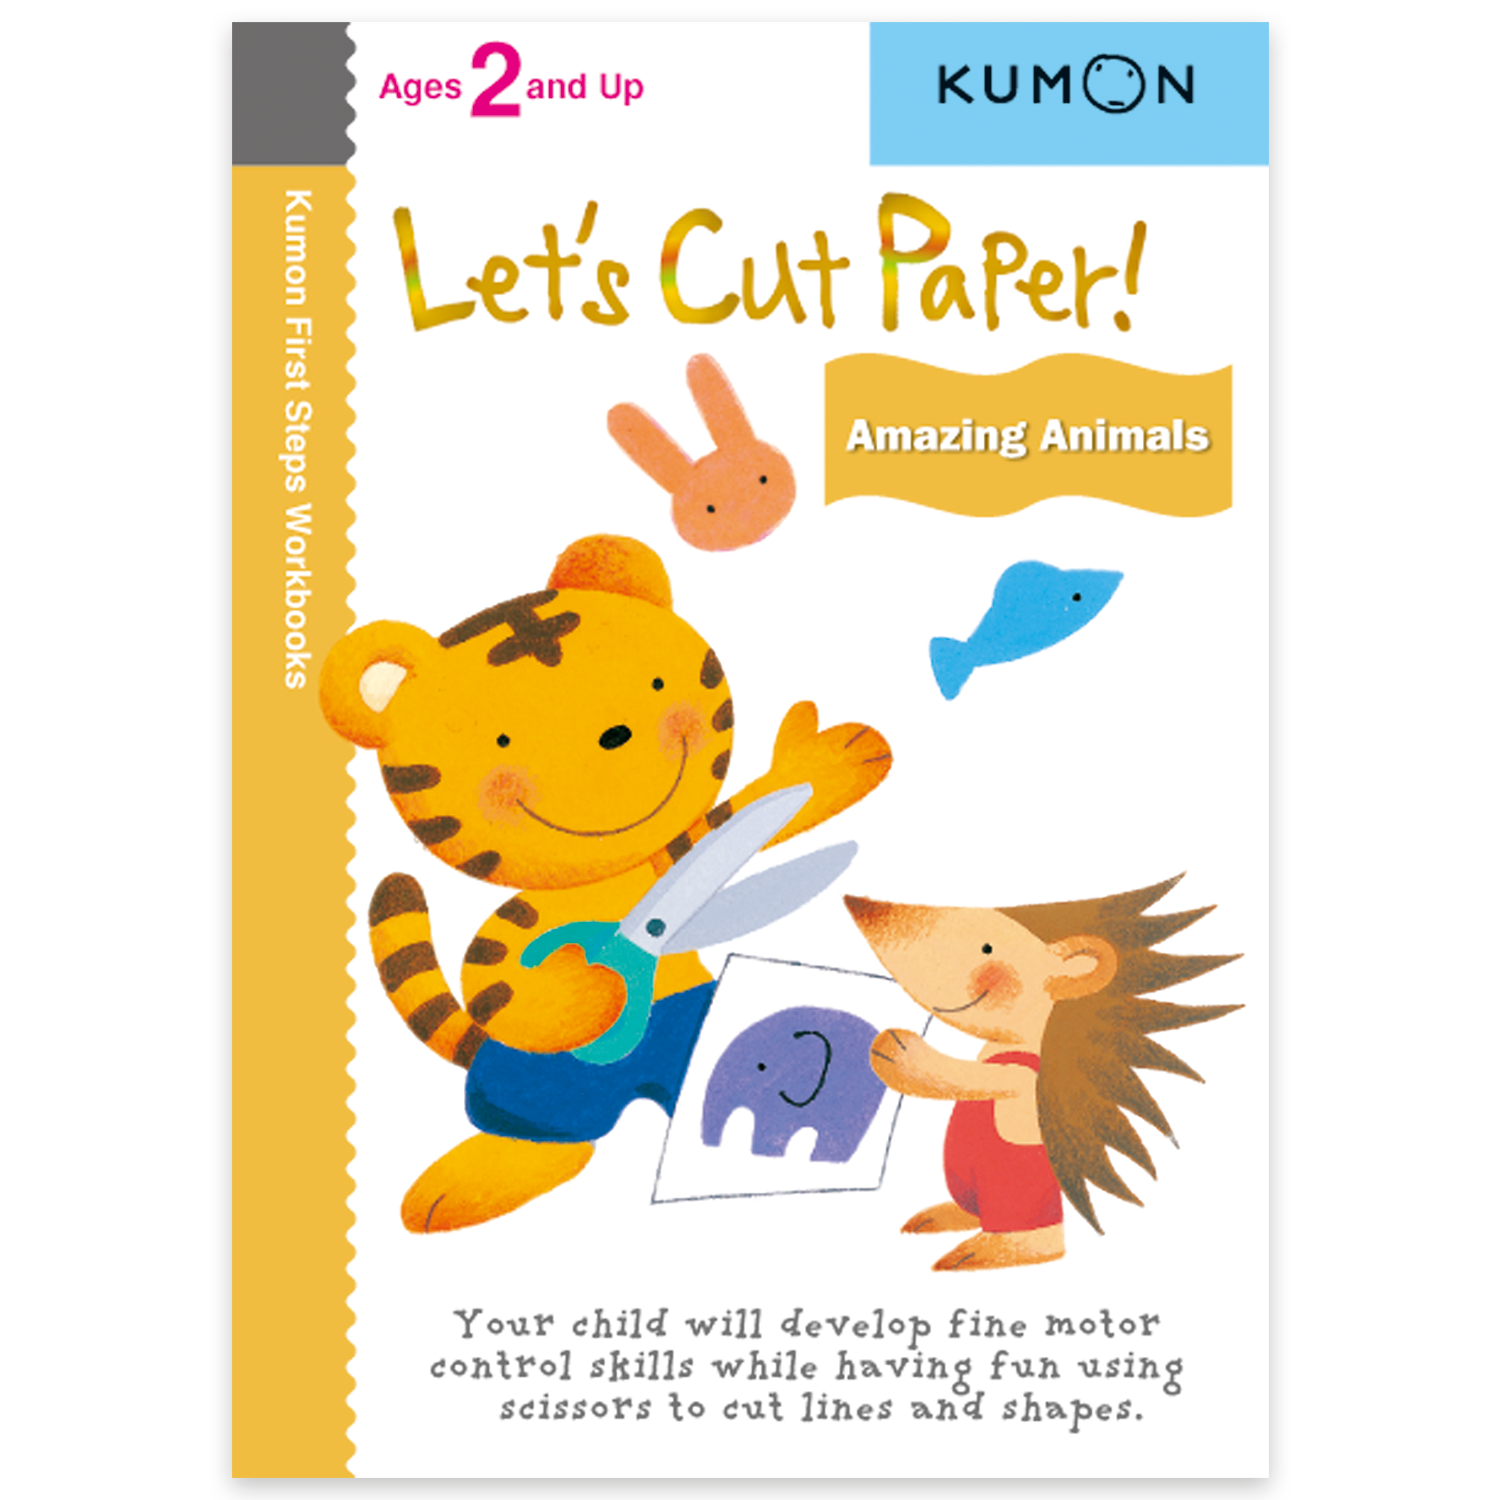 let's cut paper! amazing animals